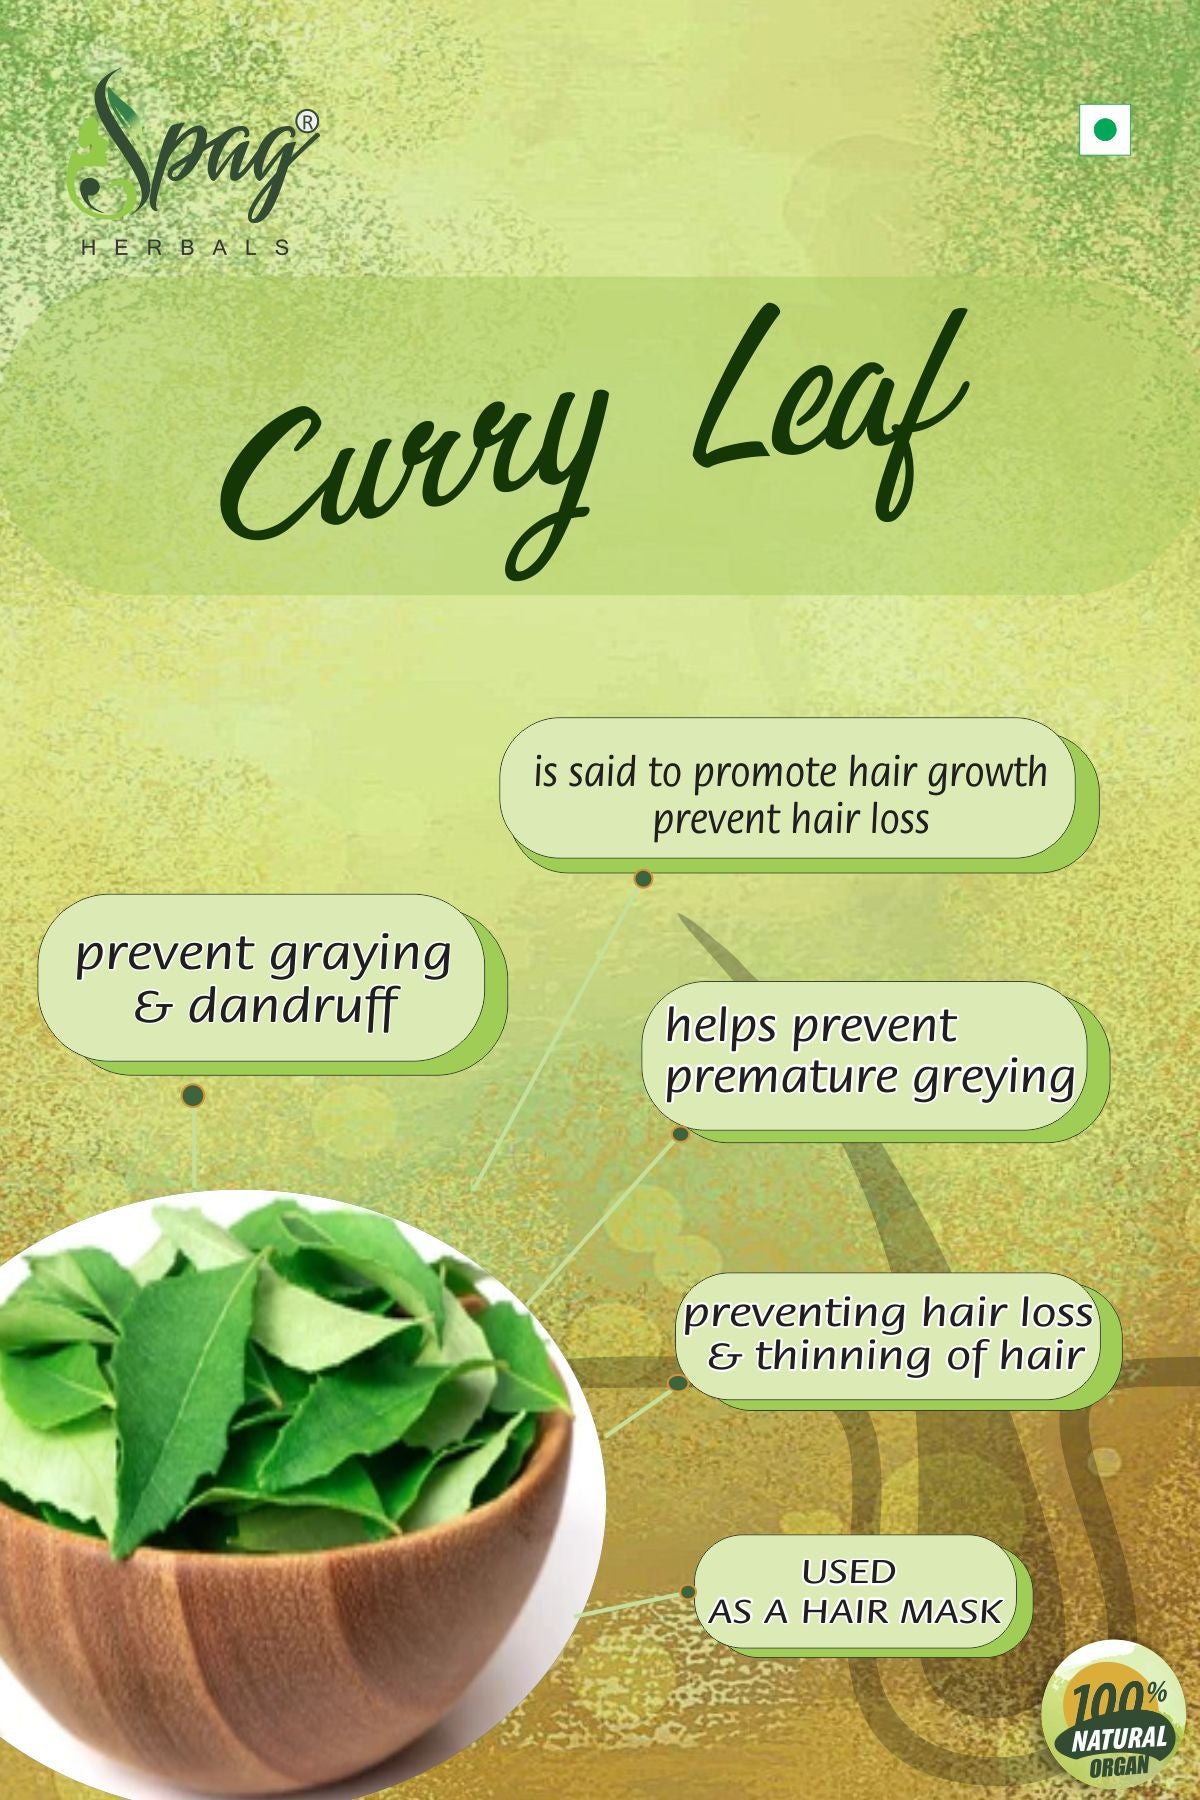 Spag Herbals Premium Curry Leaves Powder - Distacart